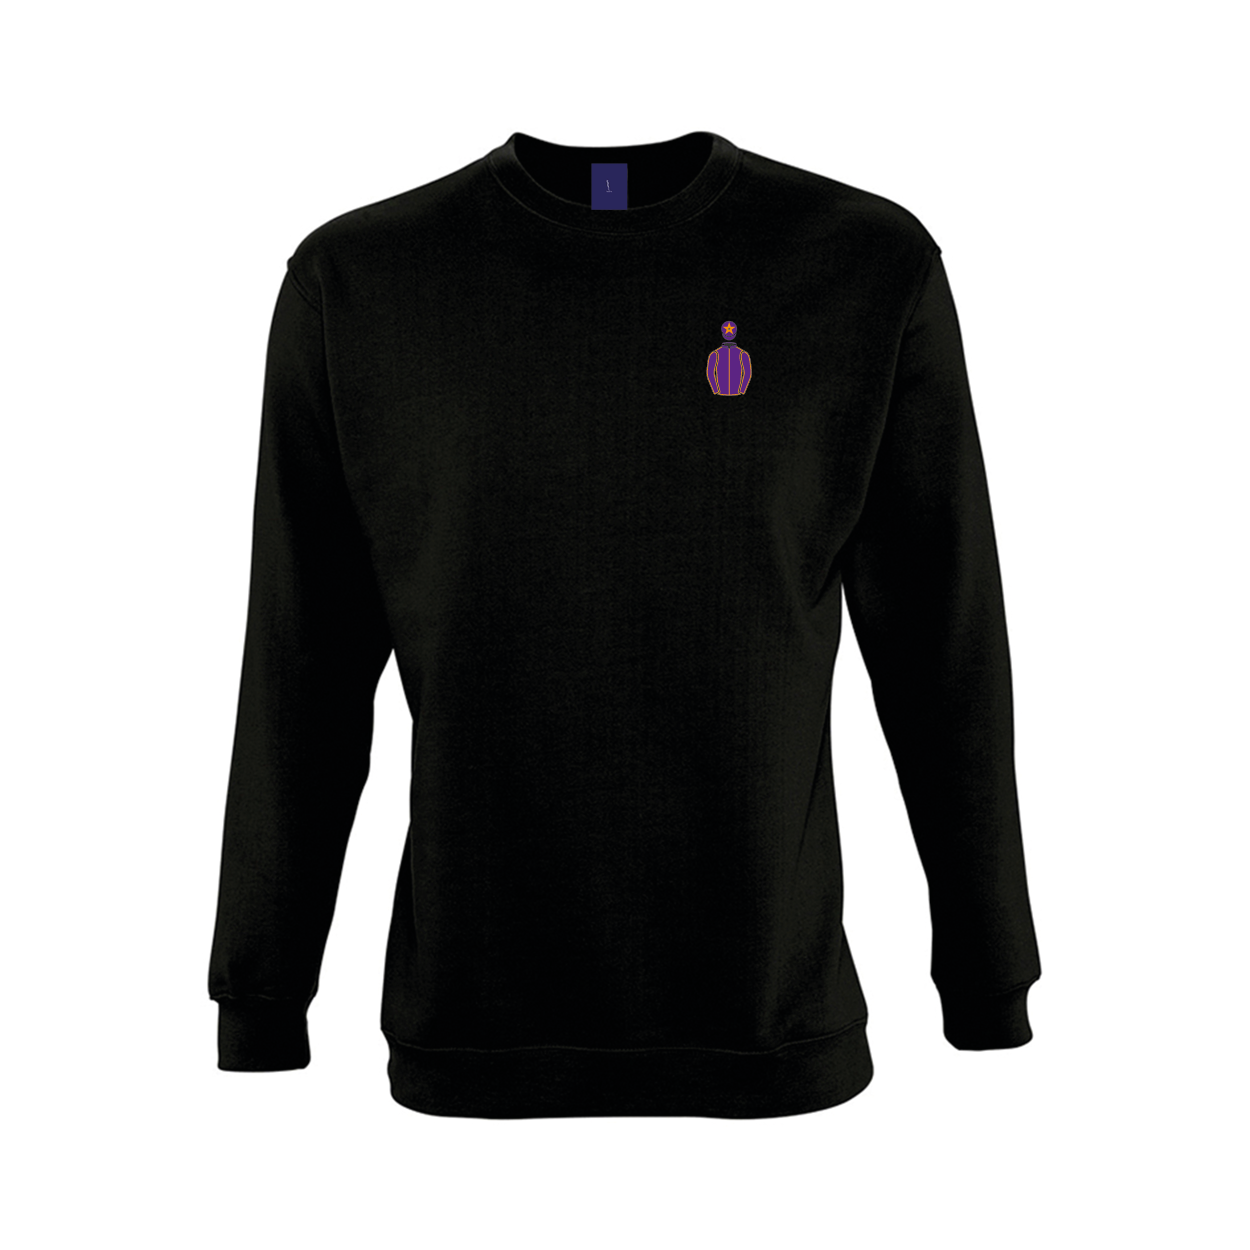 Unisex Wicklow Bloodstock (Ireland) Embroidered Sweatshirt - Clothing - Hacked Up